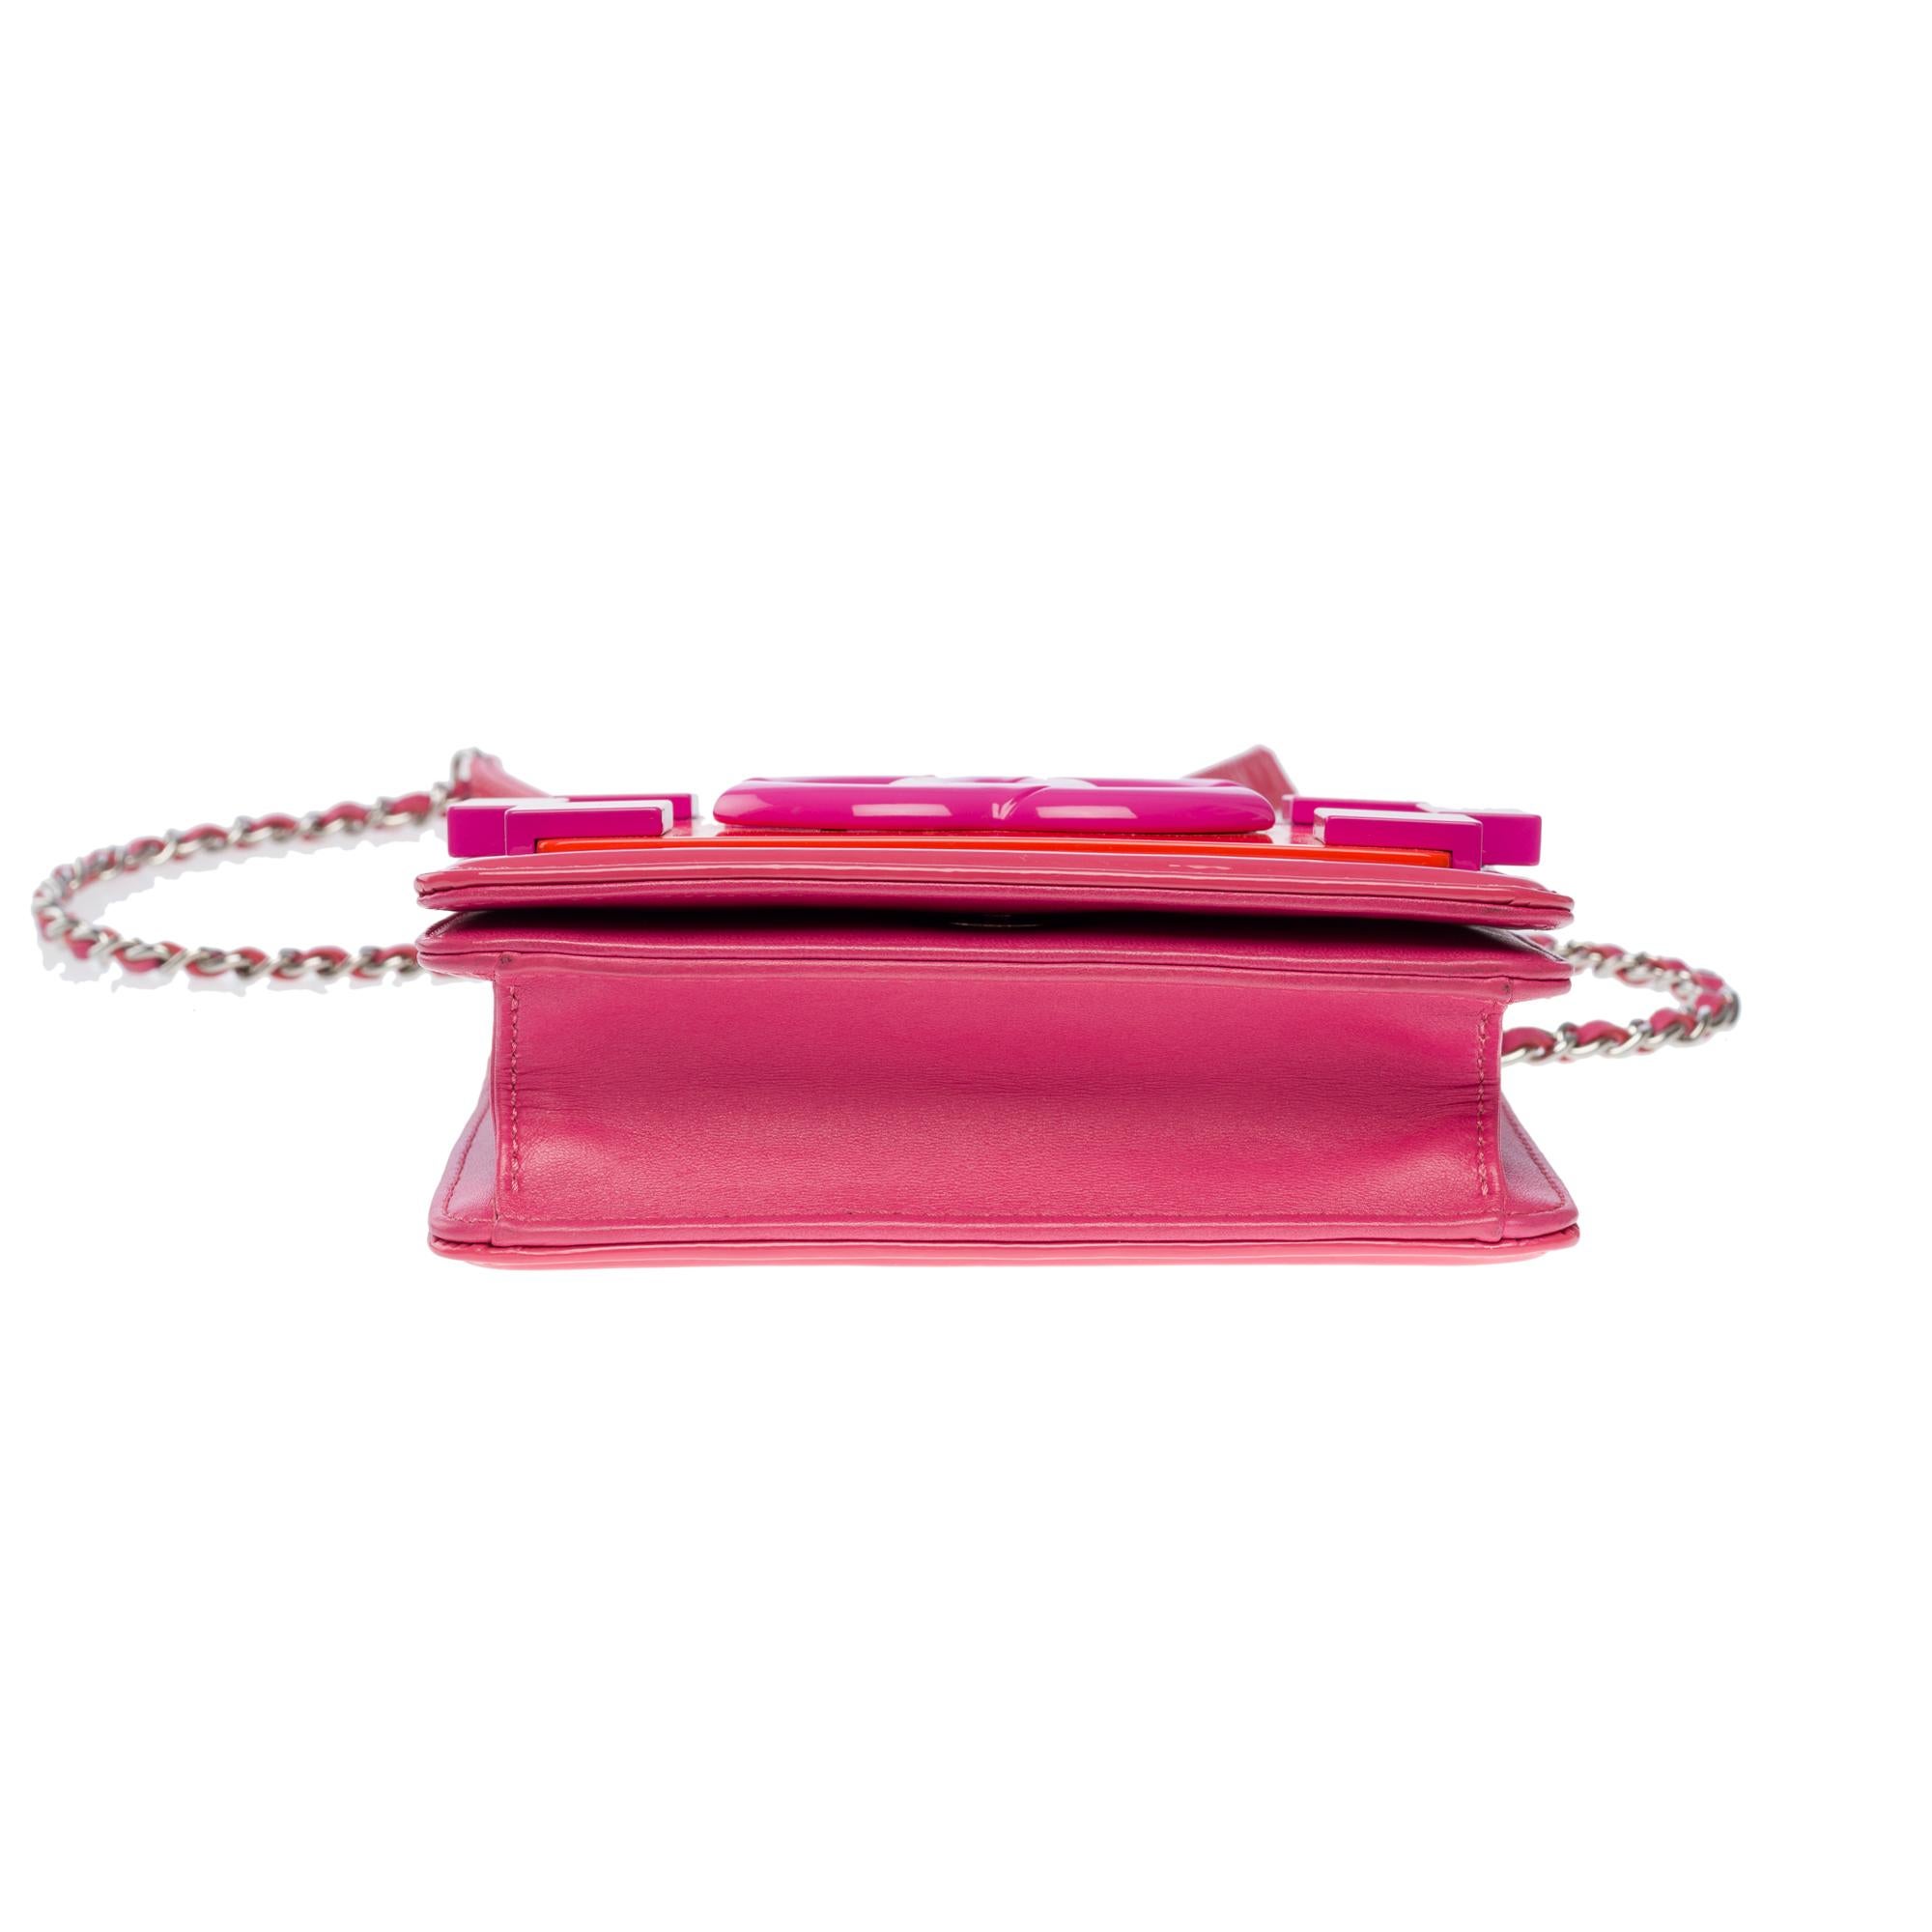 Limited edition Chanel Mini shoulder flap bag lego in Pink & Orange leather, SHW 2